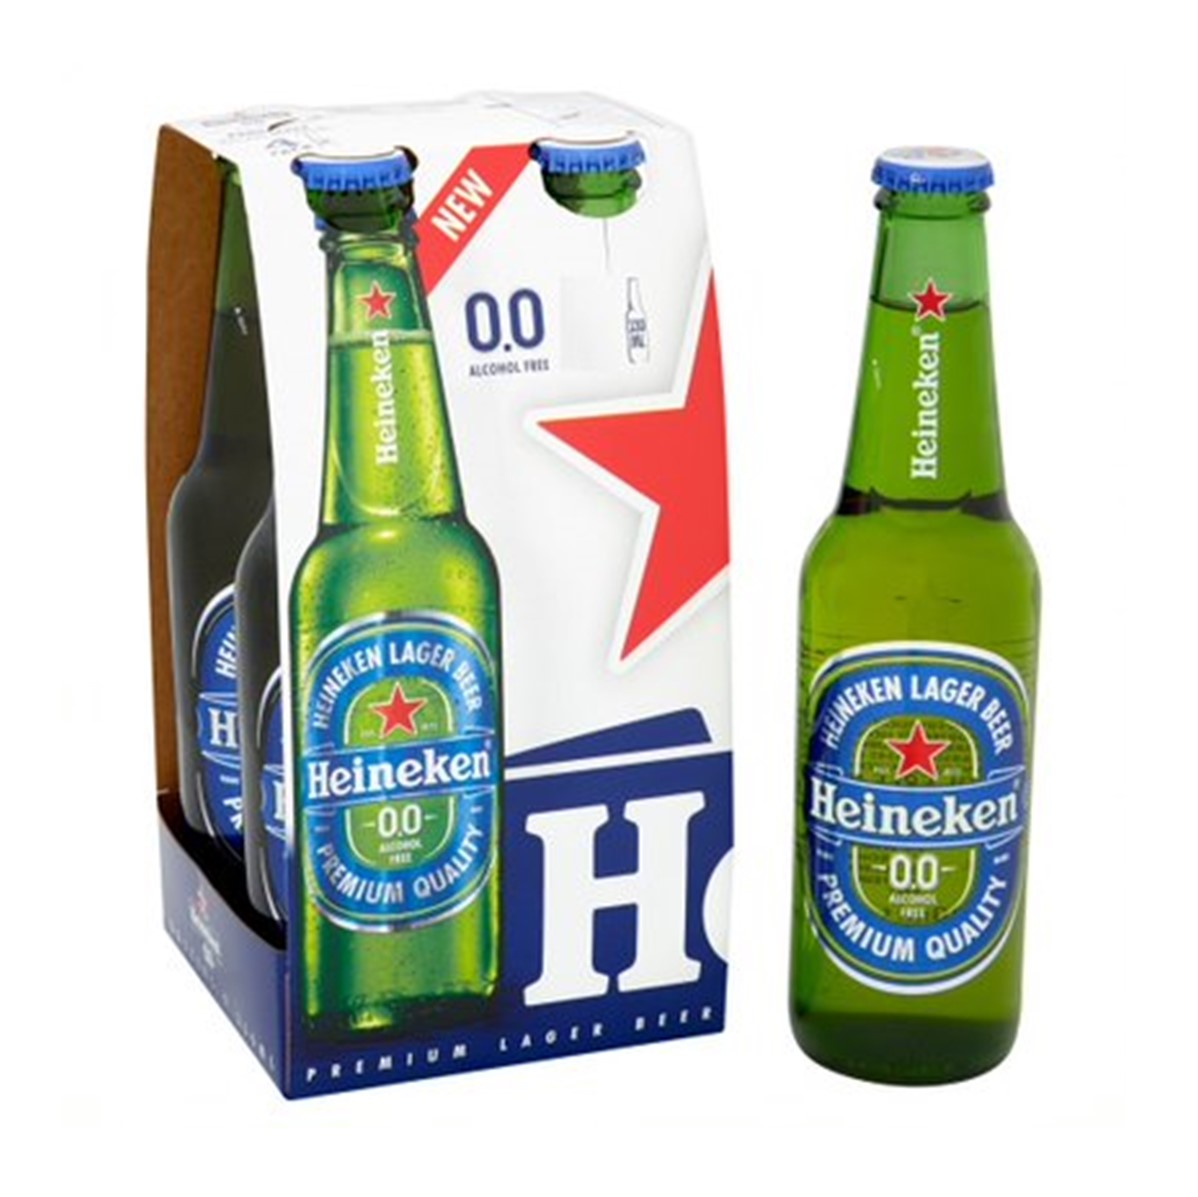 Heineken 0.0 Premium Alcohol Free Lager - 24x330ml bottles